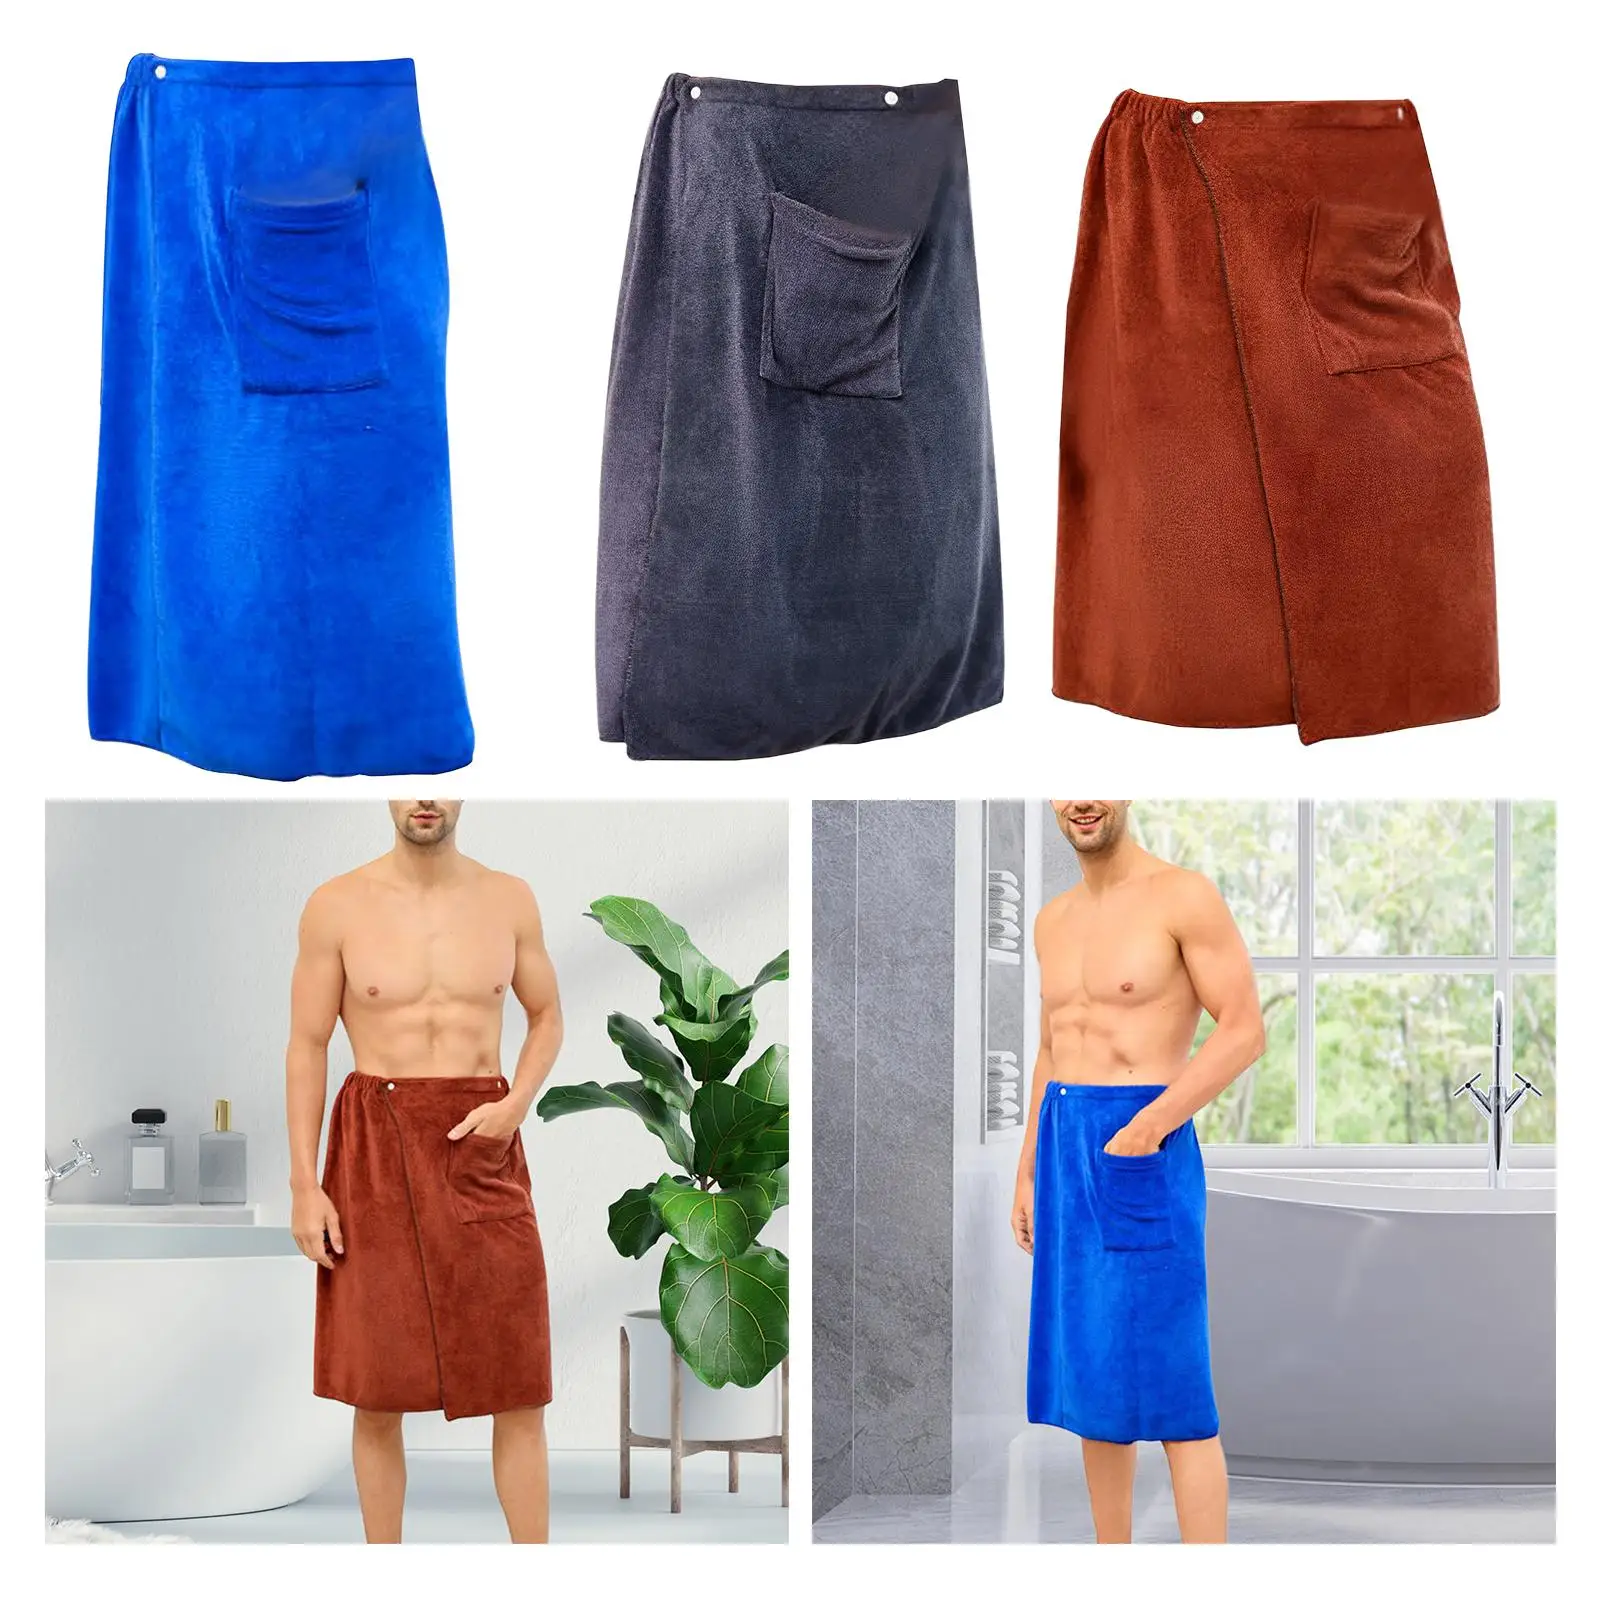 Men`s Body Wrap Towel, Adjustable Sauna Towels, Spa Wraps With Pocket, After